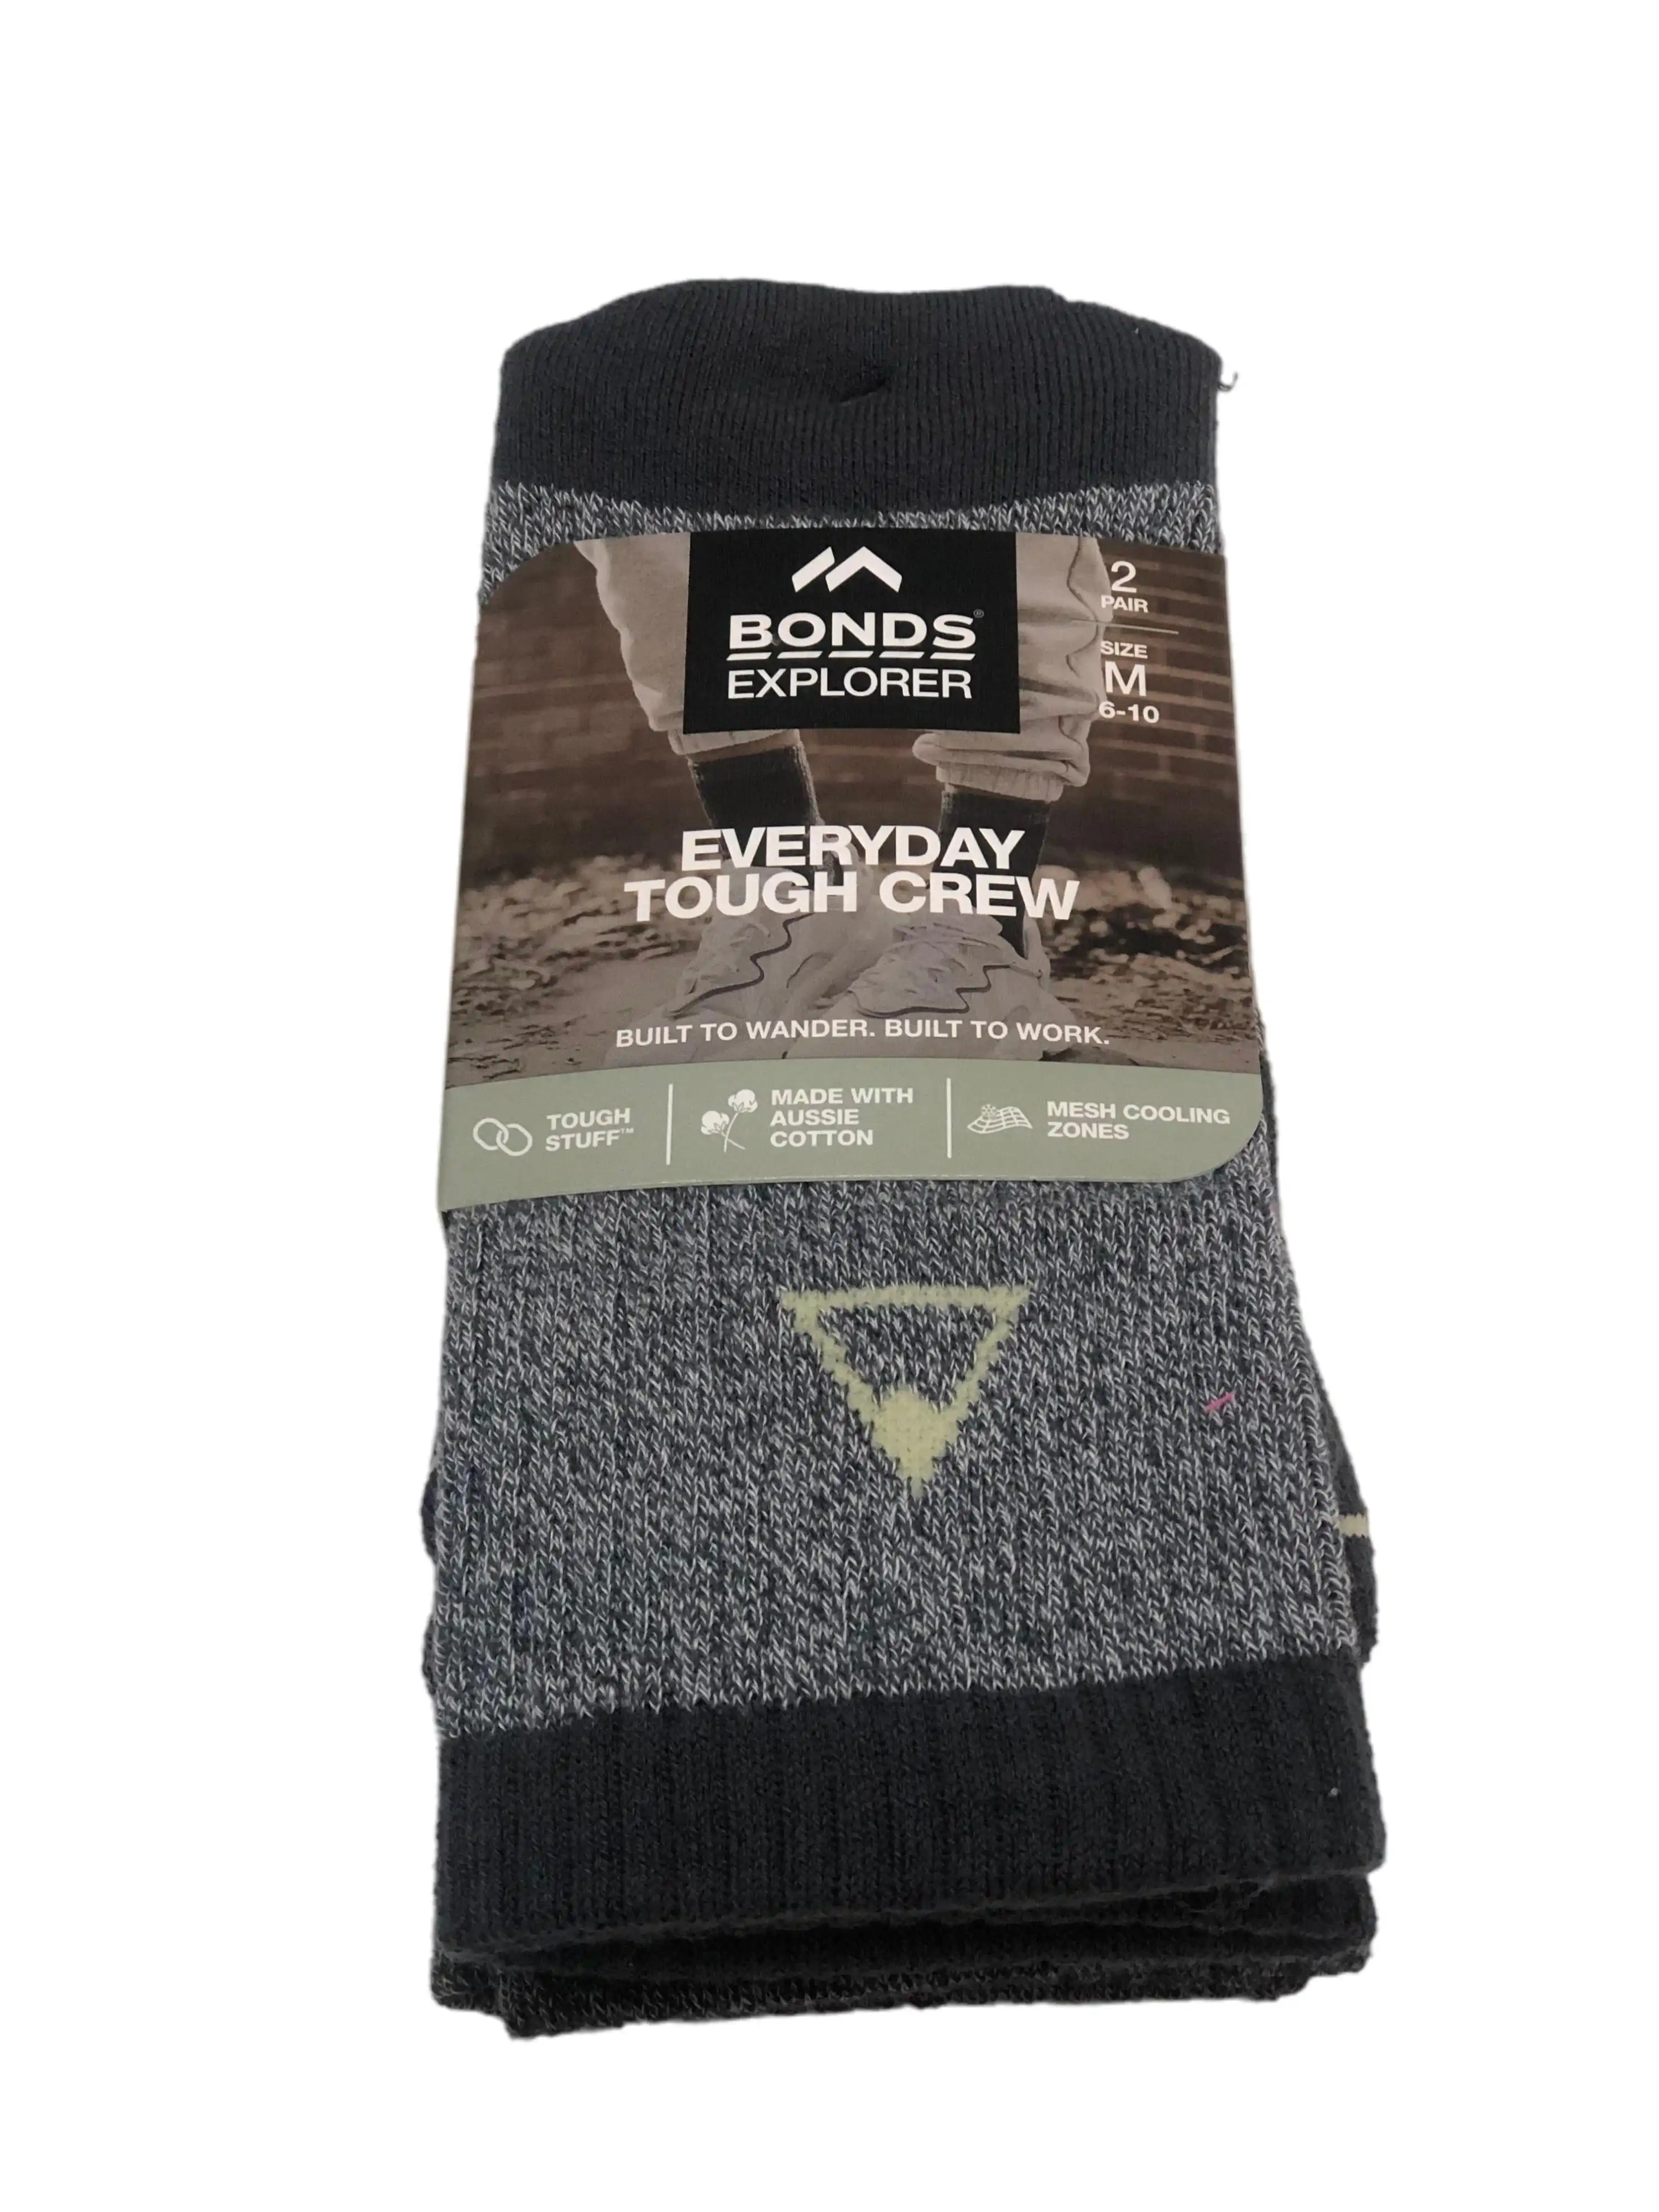 12 X Bonds Explorer Everyday Tough Crew Cotton Blend Socks - Grey 09K Print